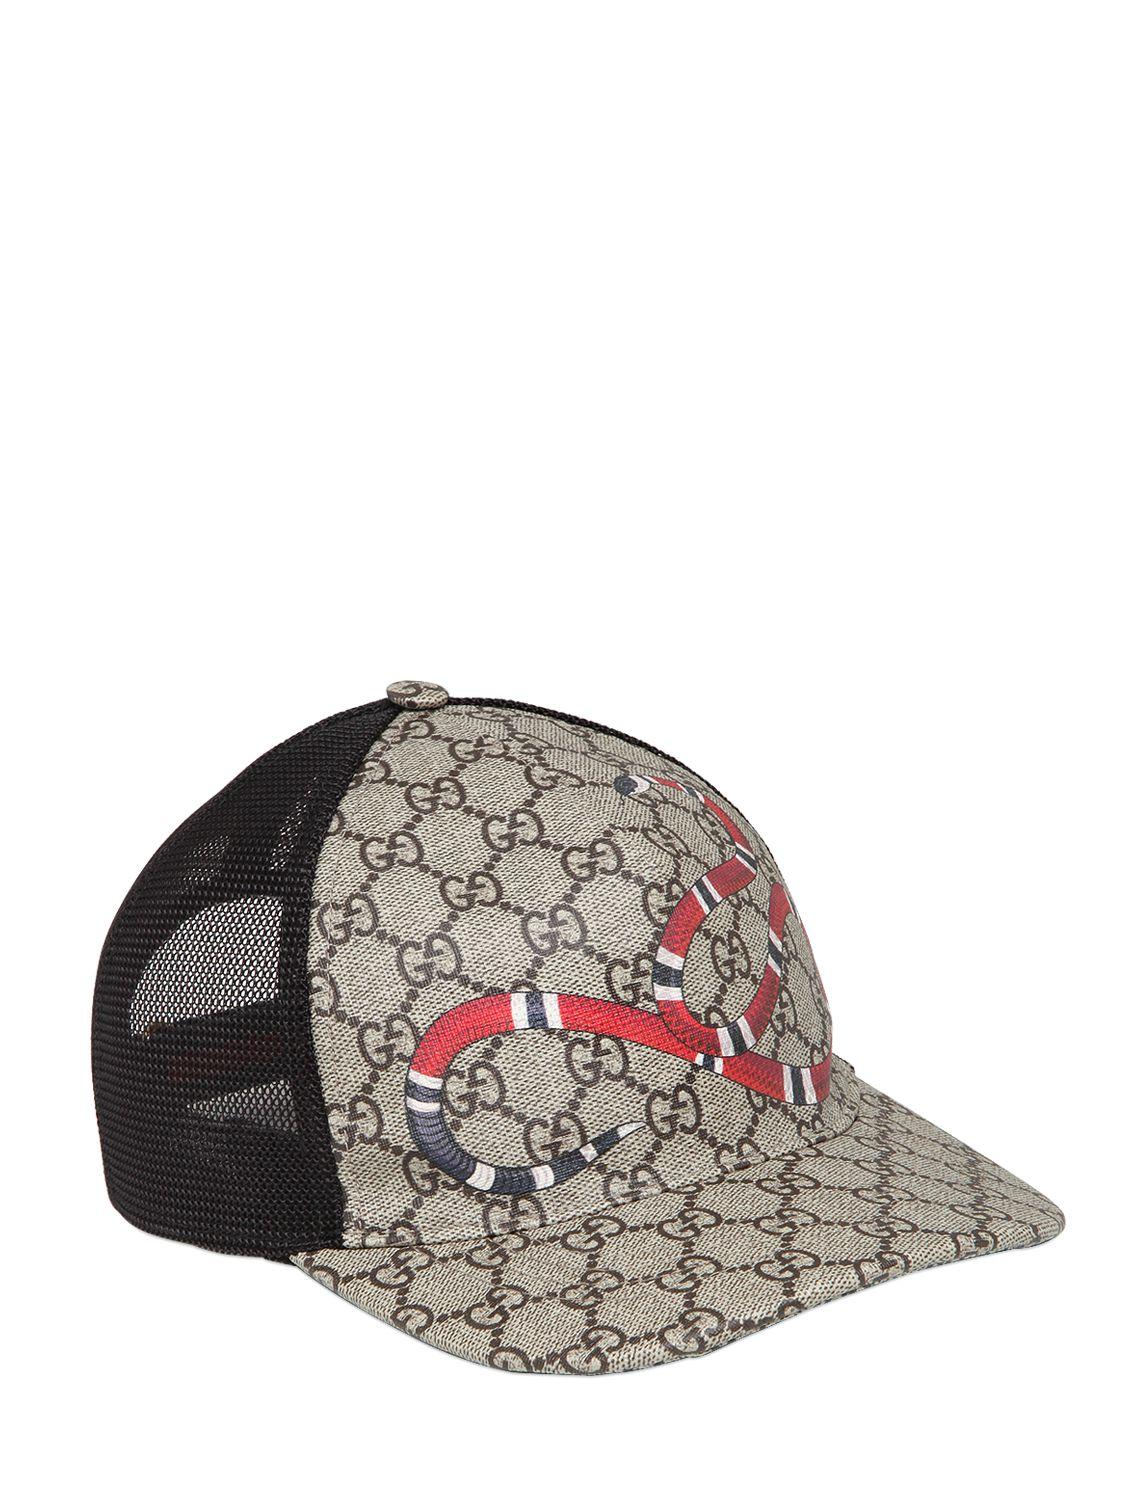 Gucci Hat With Snake Latvia, SAVE 41% - eagleflair.com